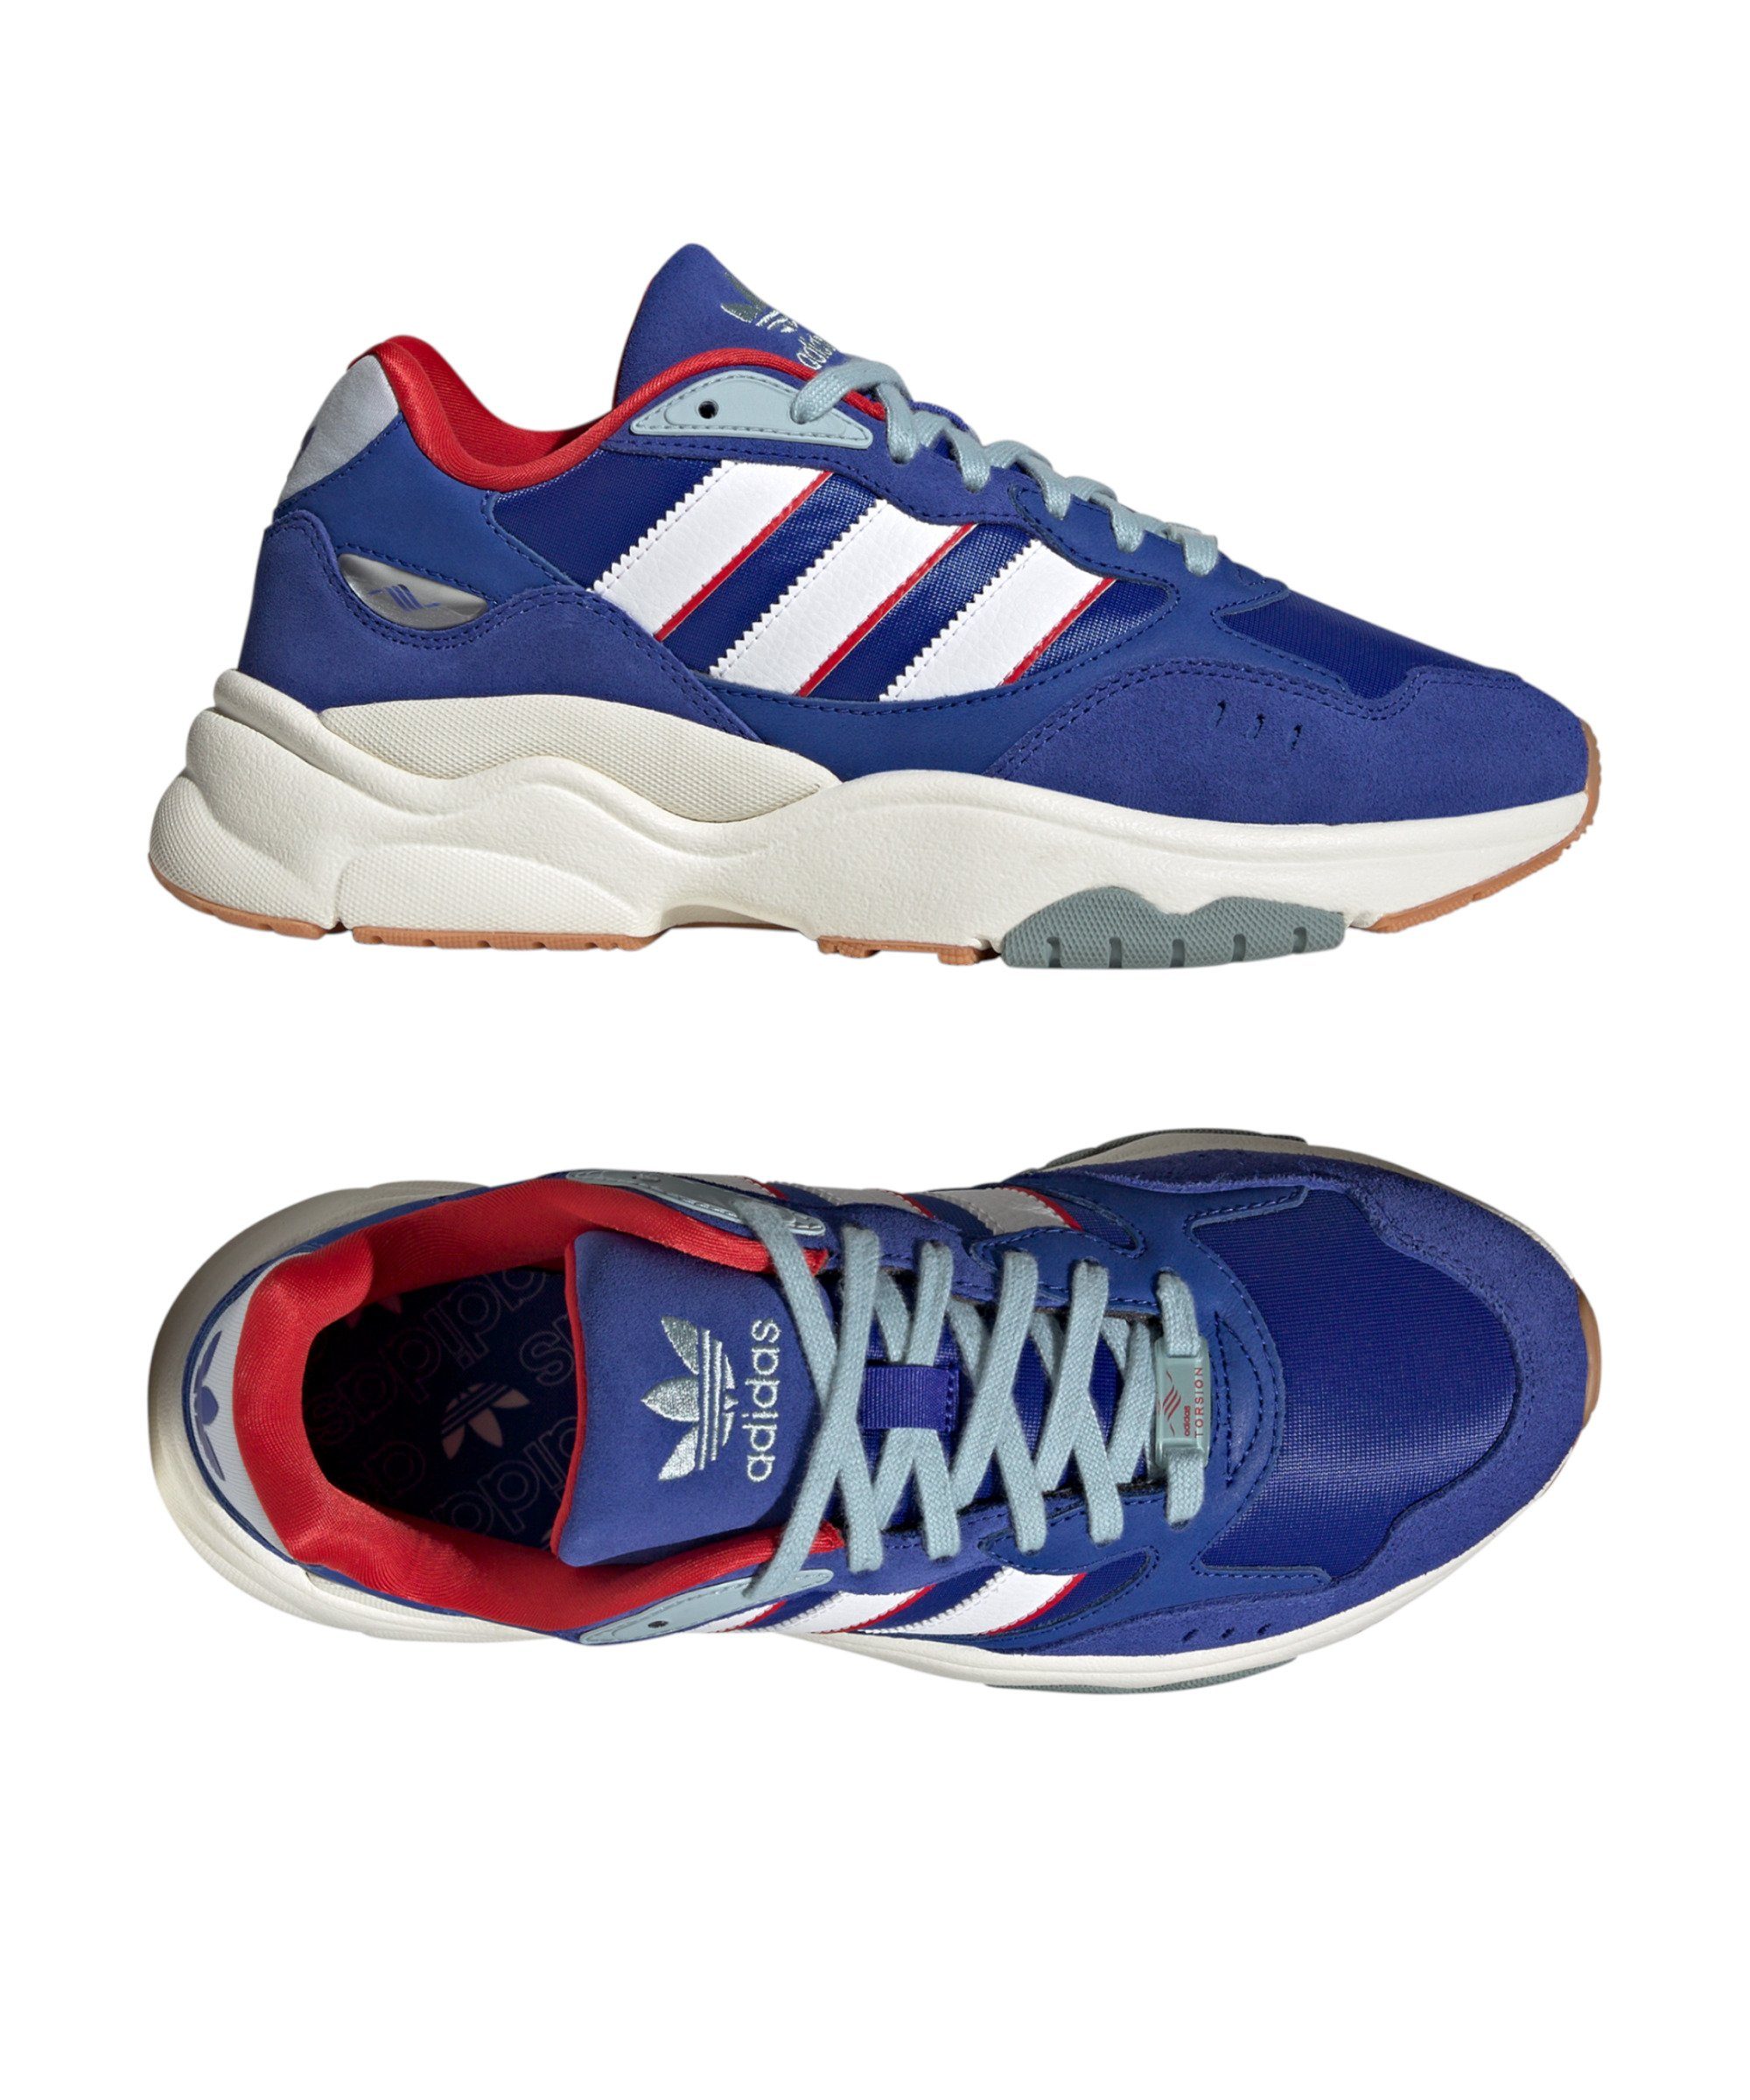 Originals Retropy F90 Sneaker adidas blauweissrot